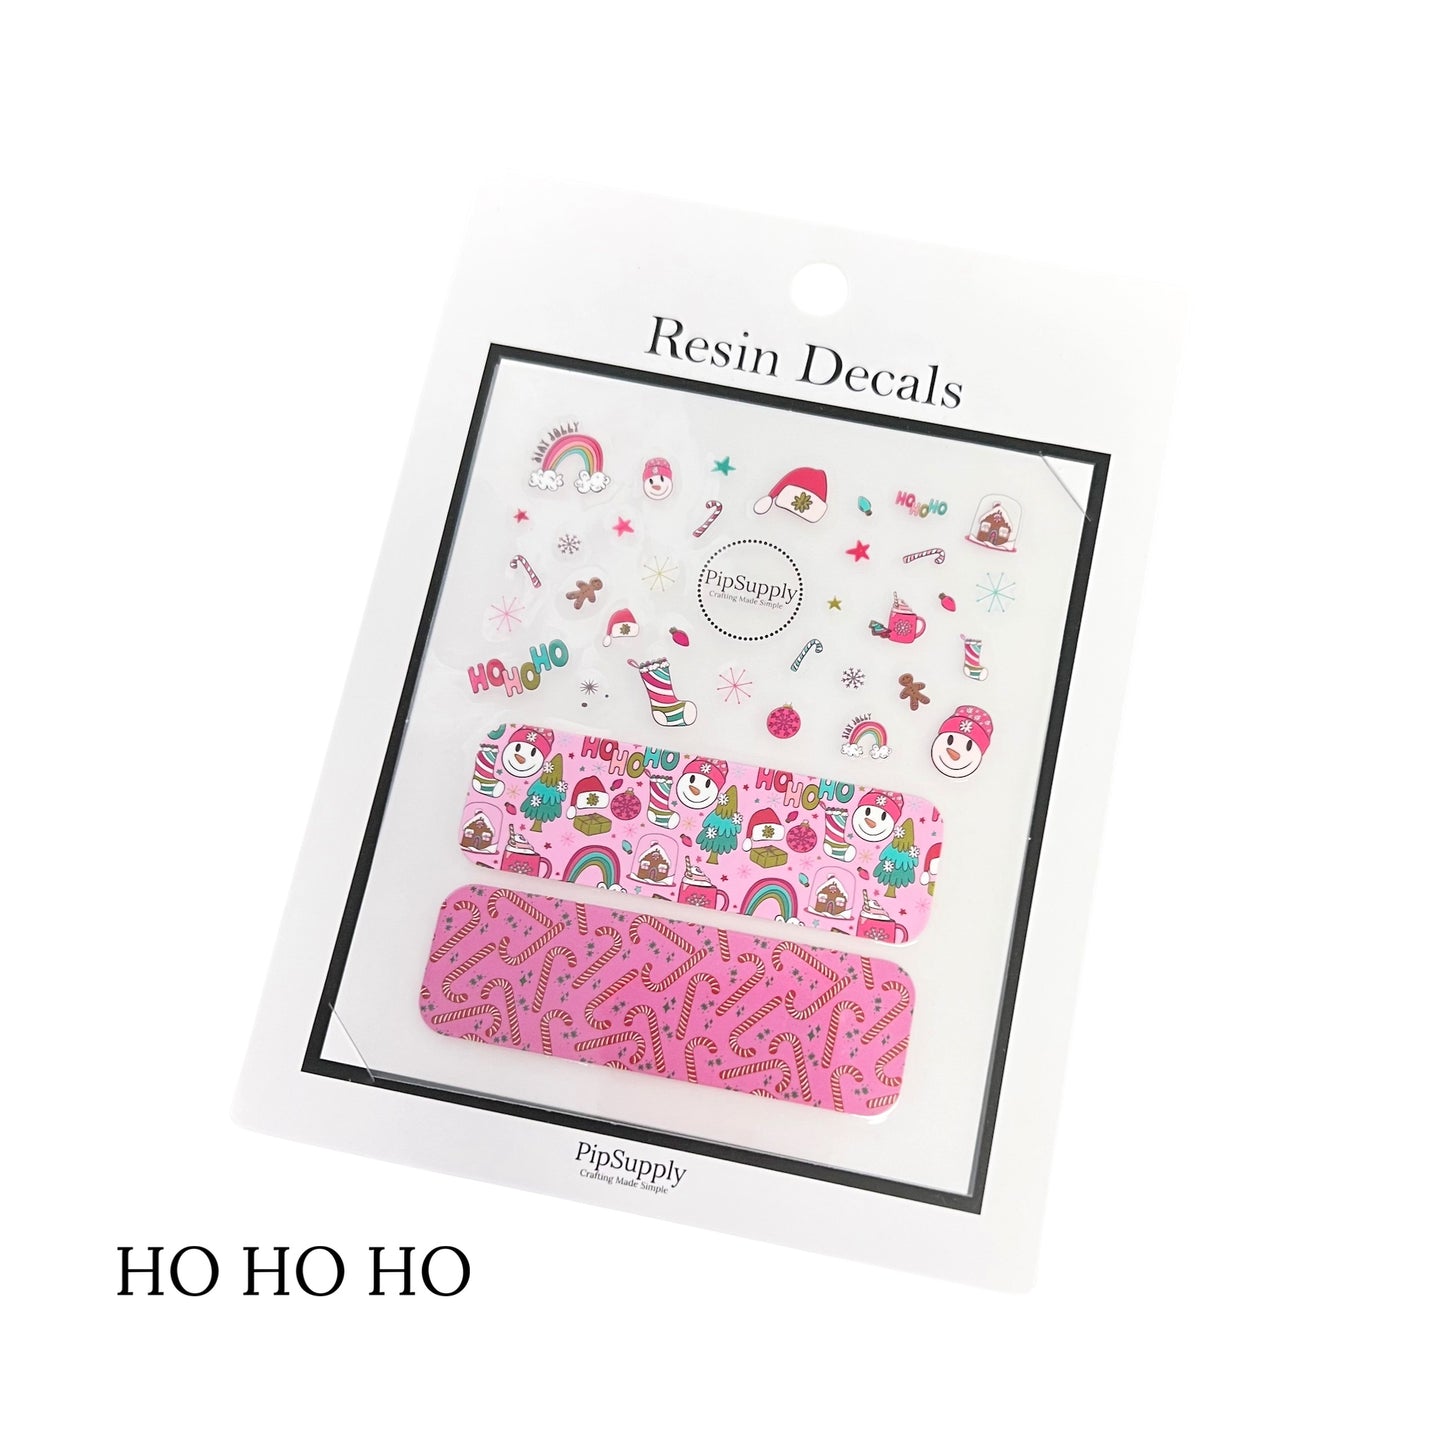 HO HO HO | The Peachy Dot | Resin Decals